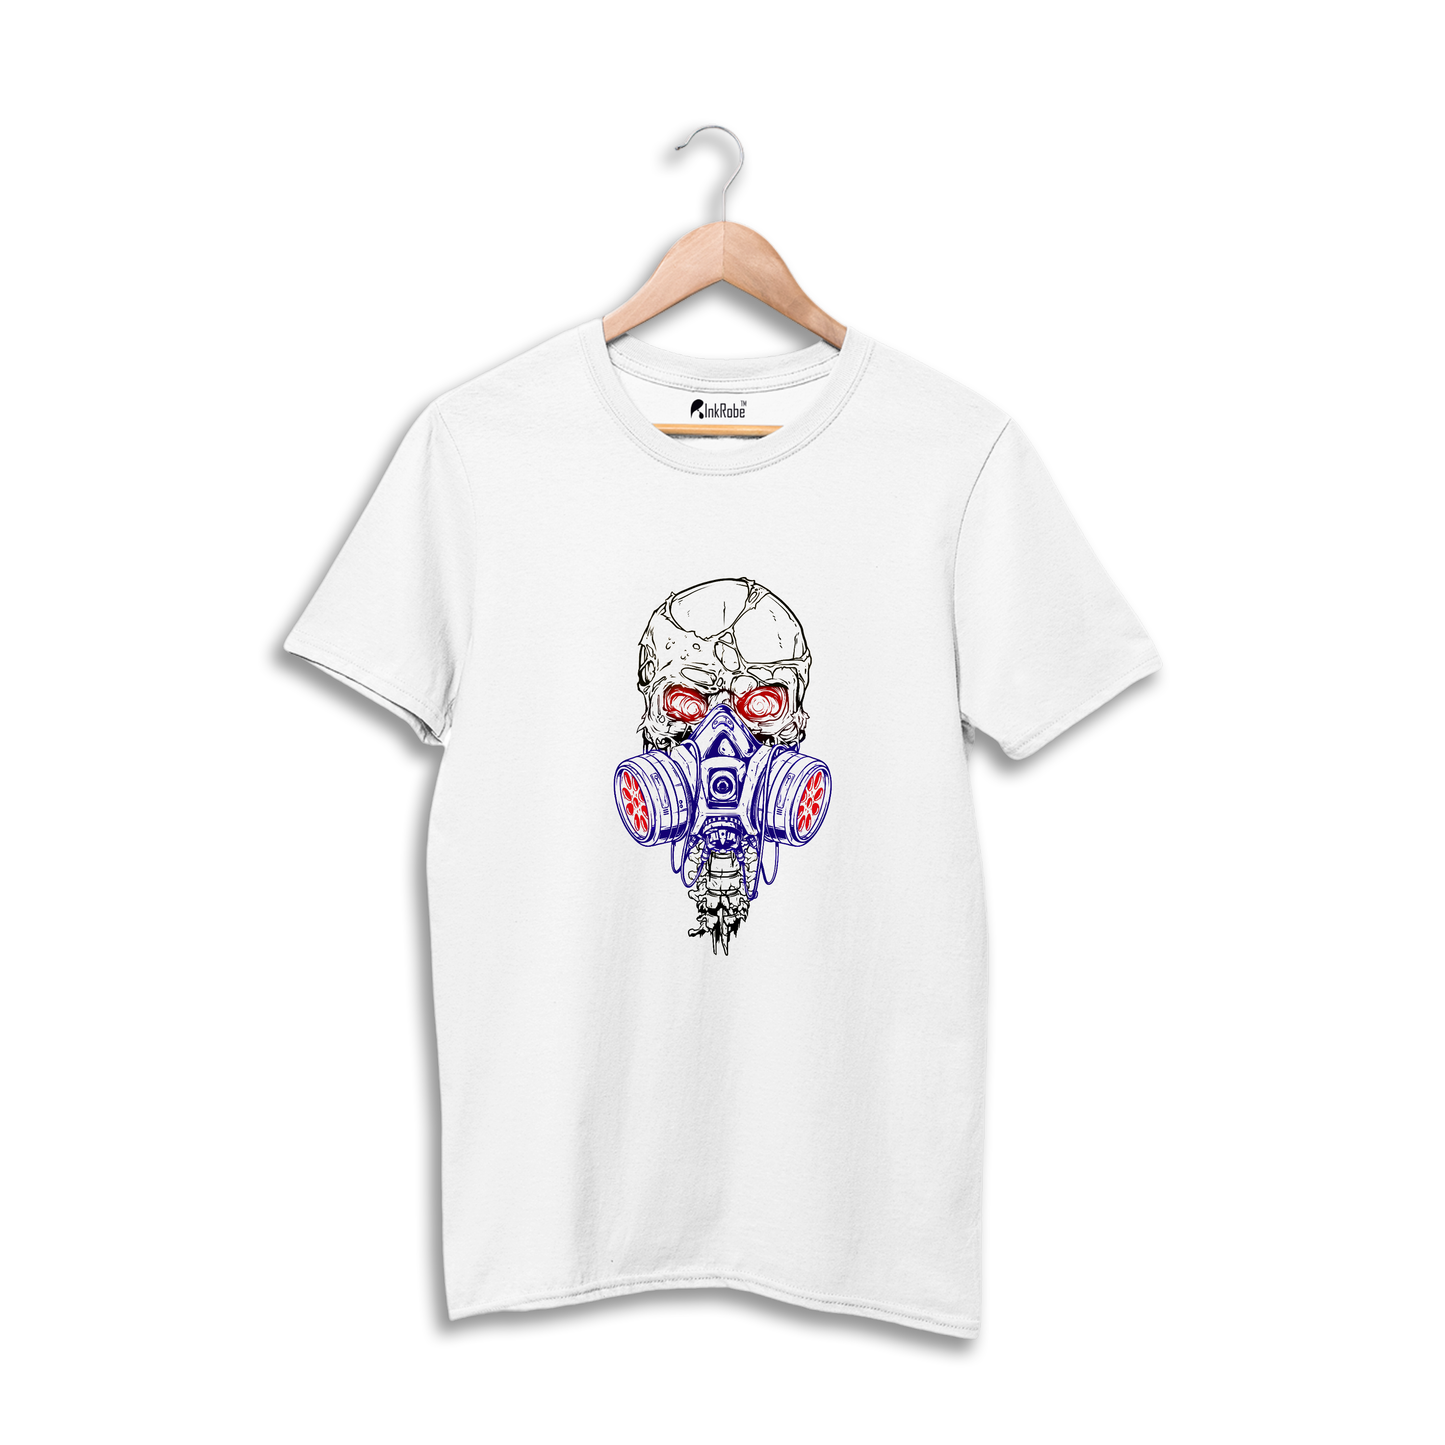 Human skull with gas mask - Anime T-Shirt